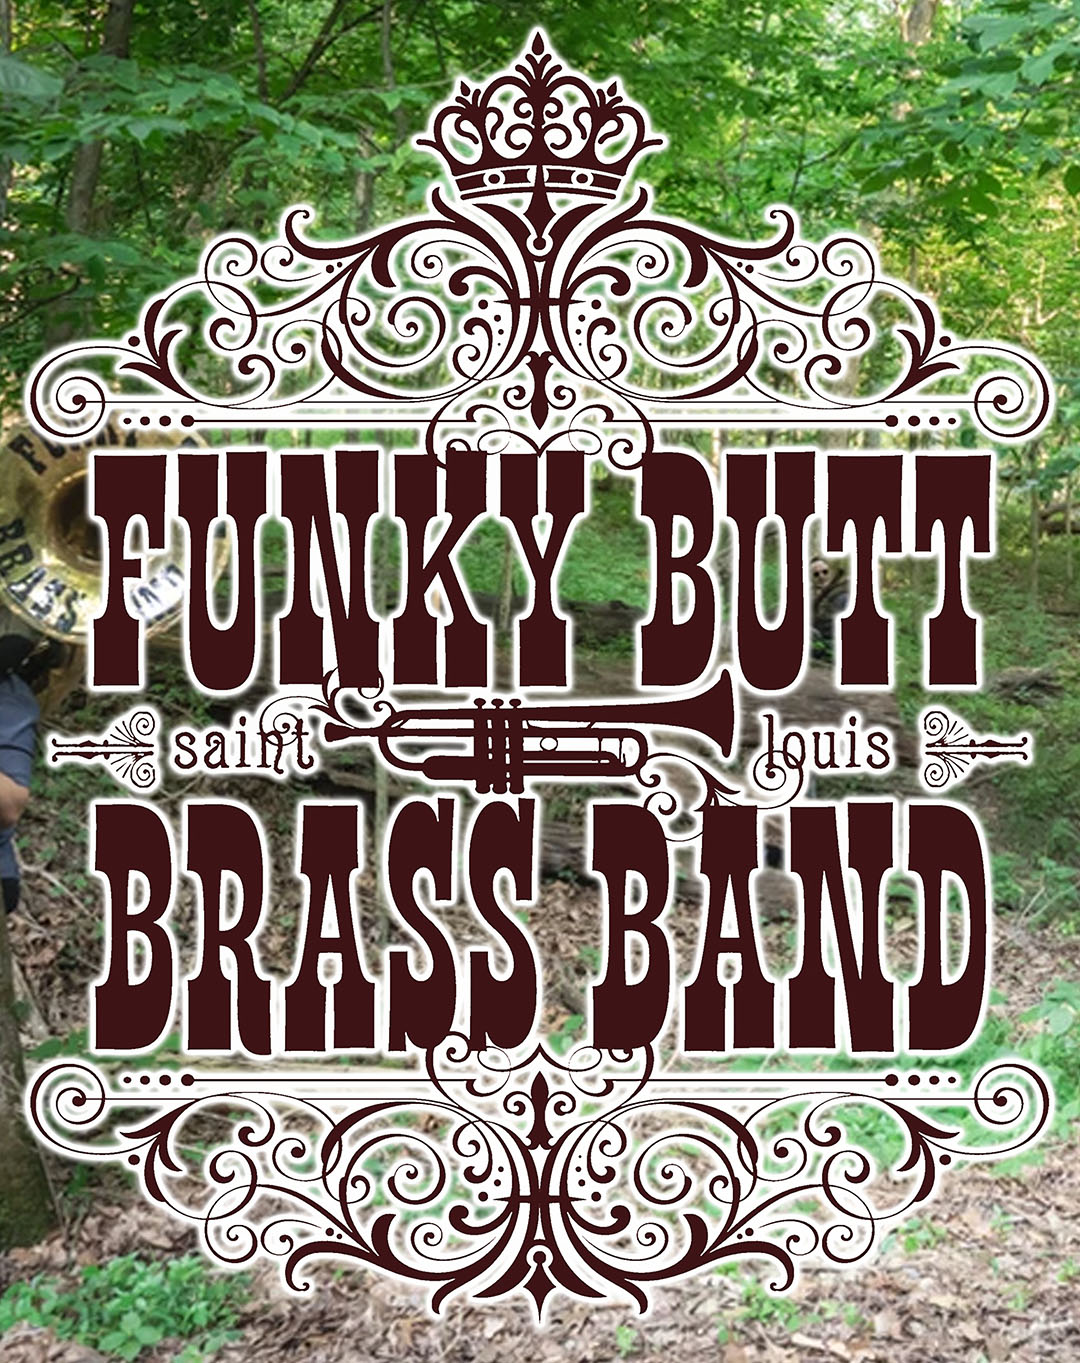 Broadway-Oyster-Bar Funky Butt Brass Band logo image